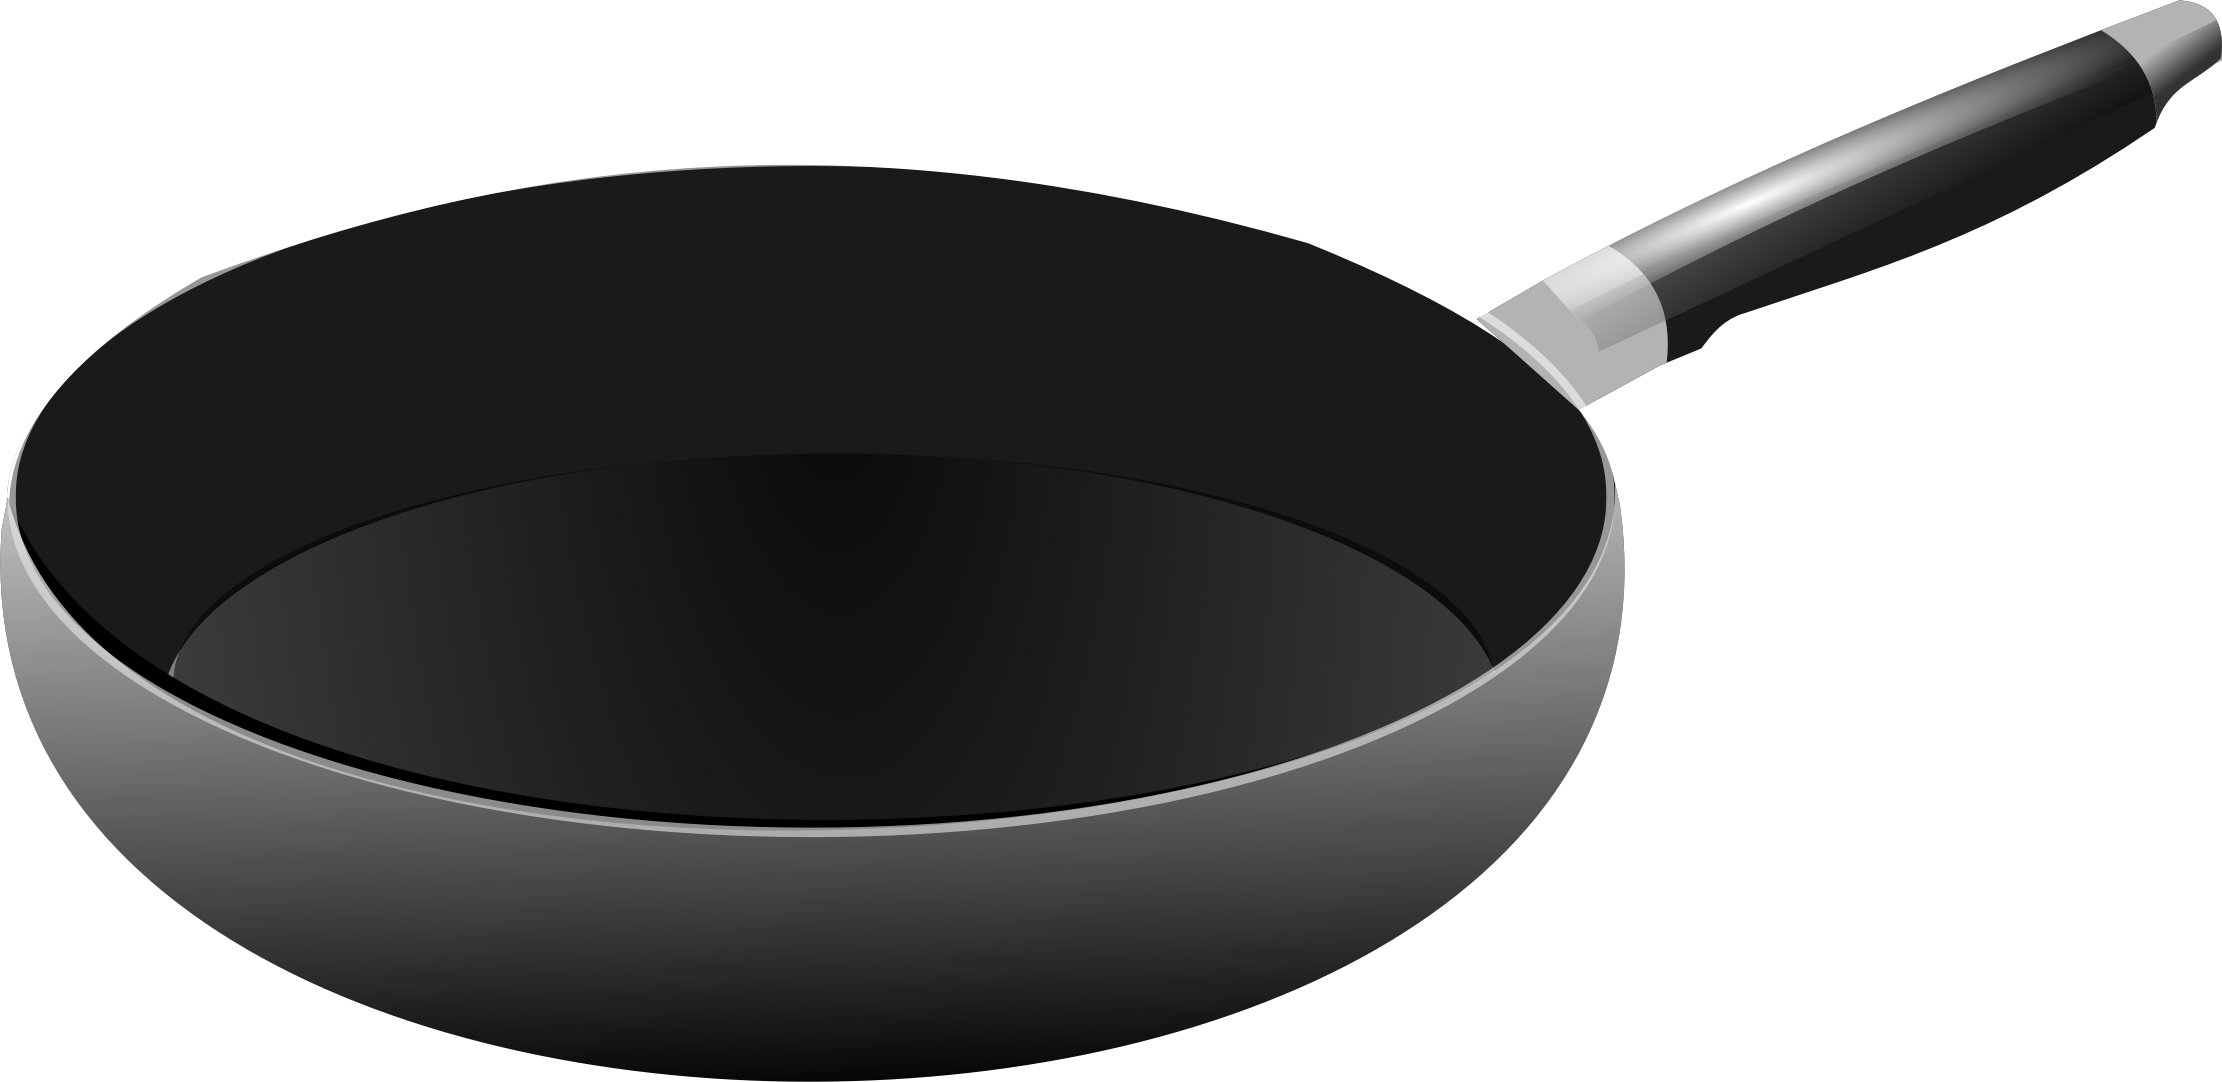 Download Cooking Pan Png Images Transparent Gallery. Advertisement - Cooking Pan, Transparent background PNG HD thumbnail